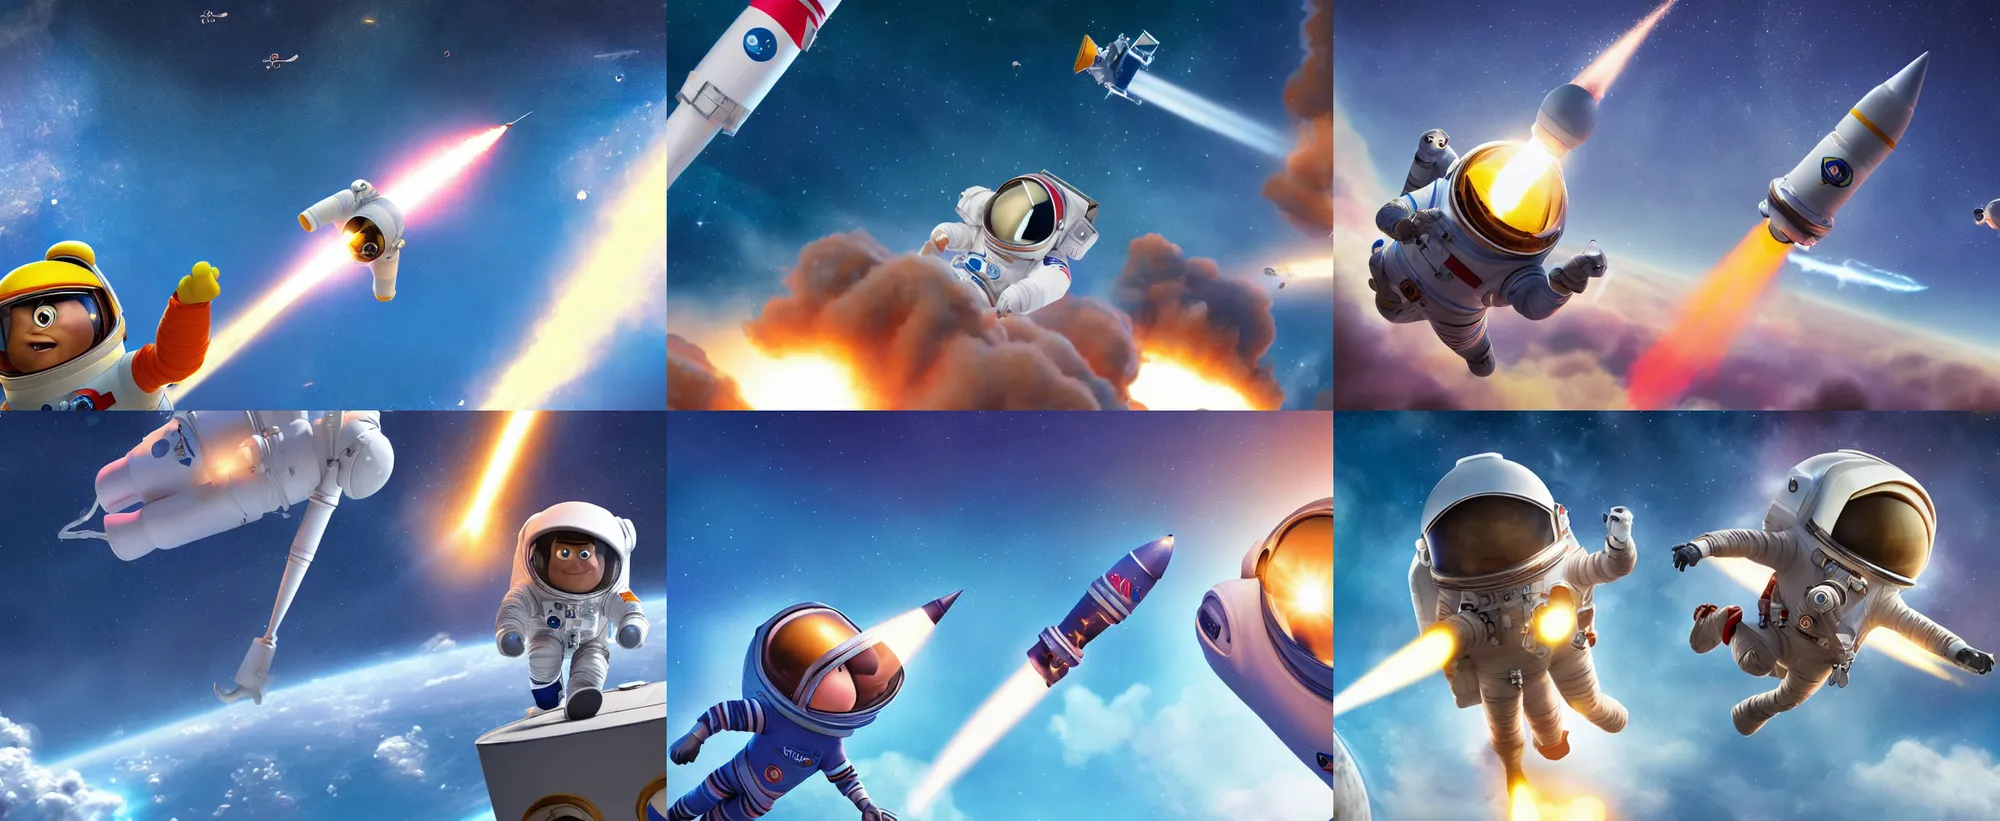 Prompt: astronaut riding forged aluminim rocket into space, cinematic close up lighting, 3d animated feature film, disney, pixar, illumination entertainment, blue sky